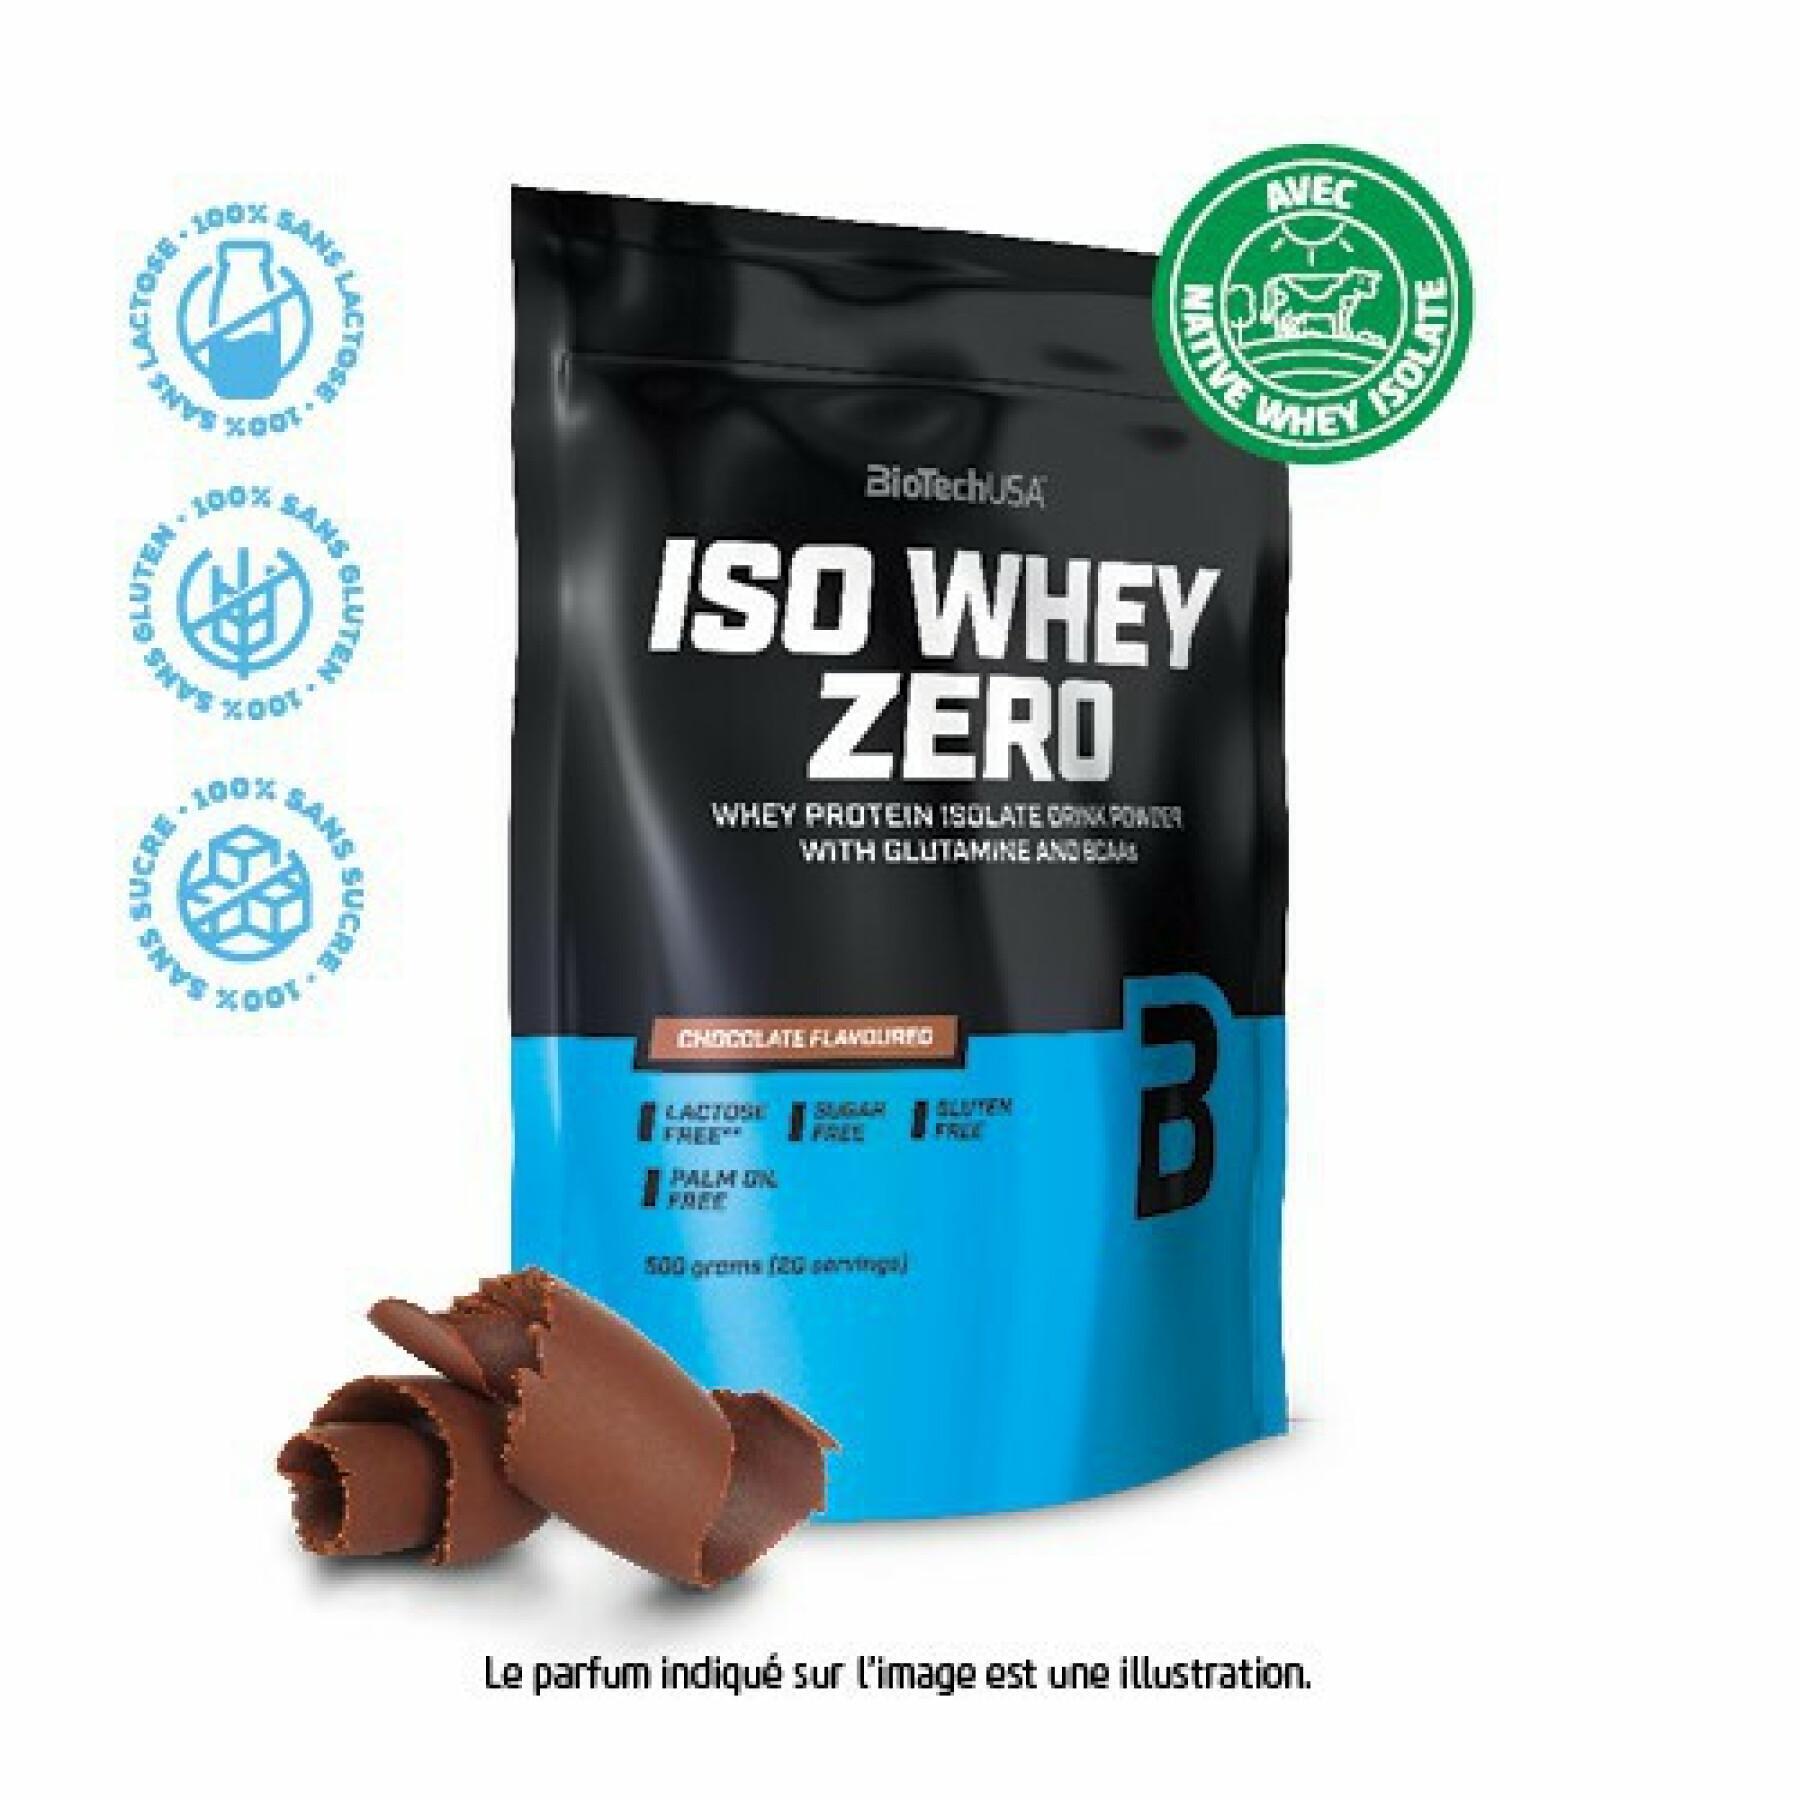 Lot de 10 sacs de protéines Biotech USA iso whey zero lactose free - Chocolate - 500g